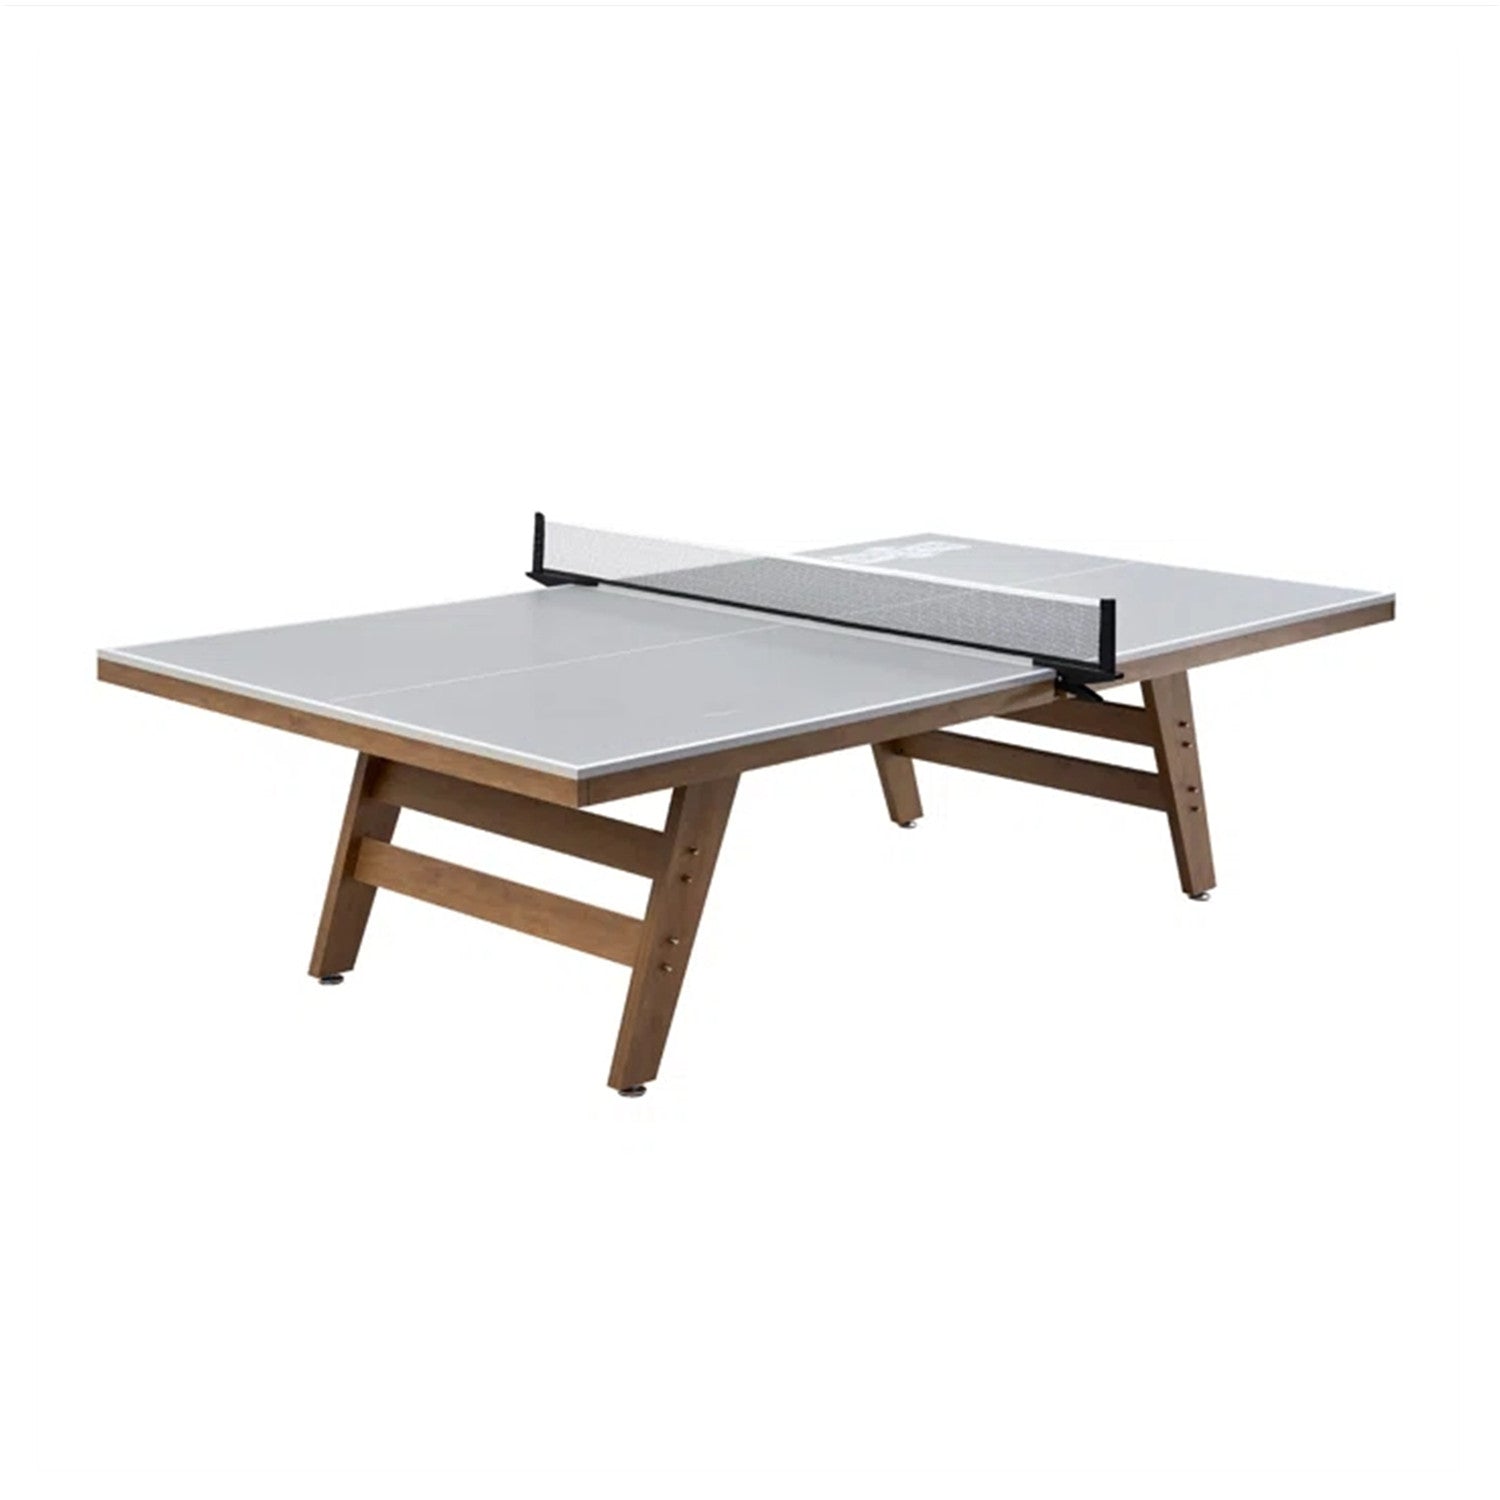 19mm Hamilton Table Tennis Table